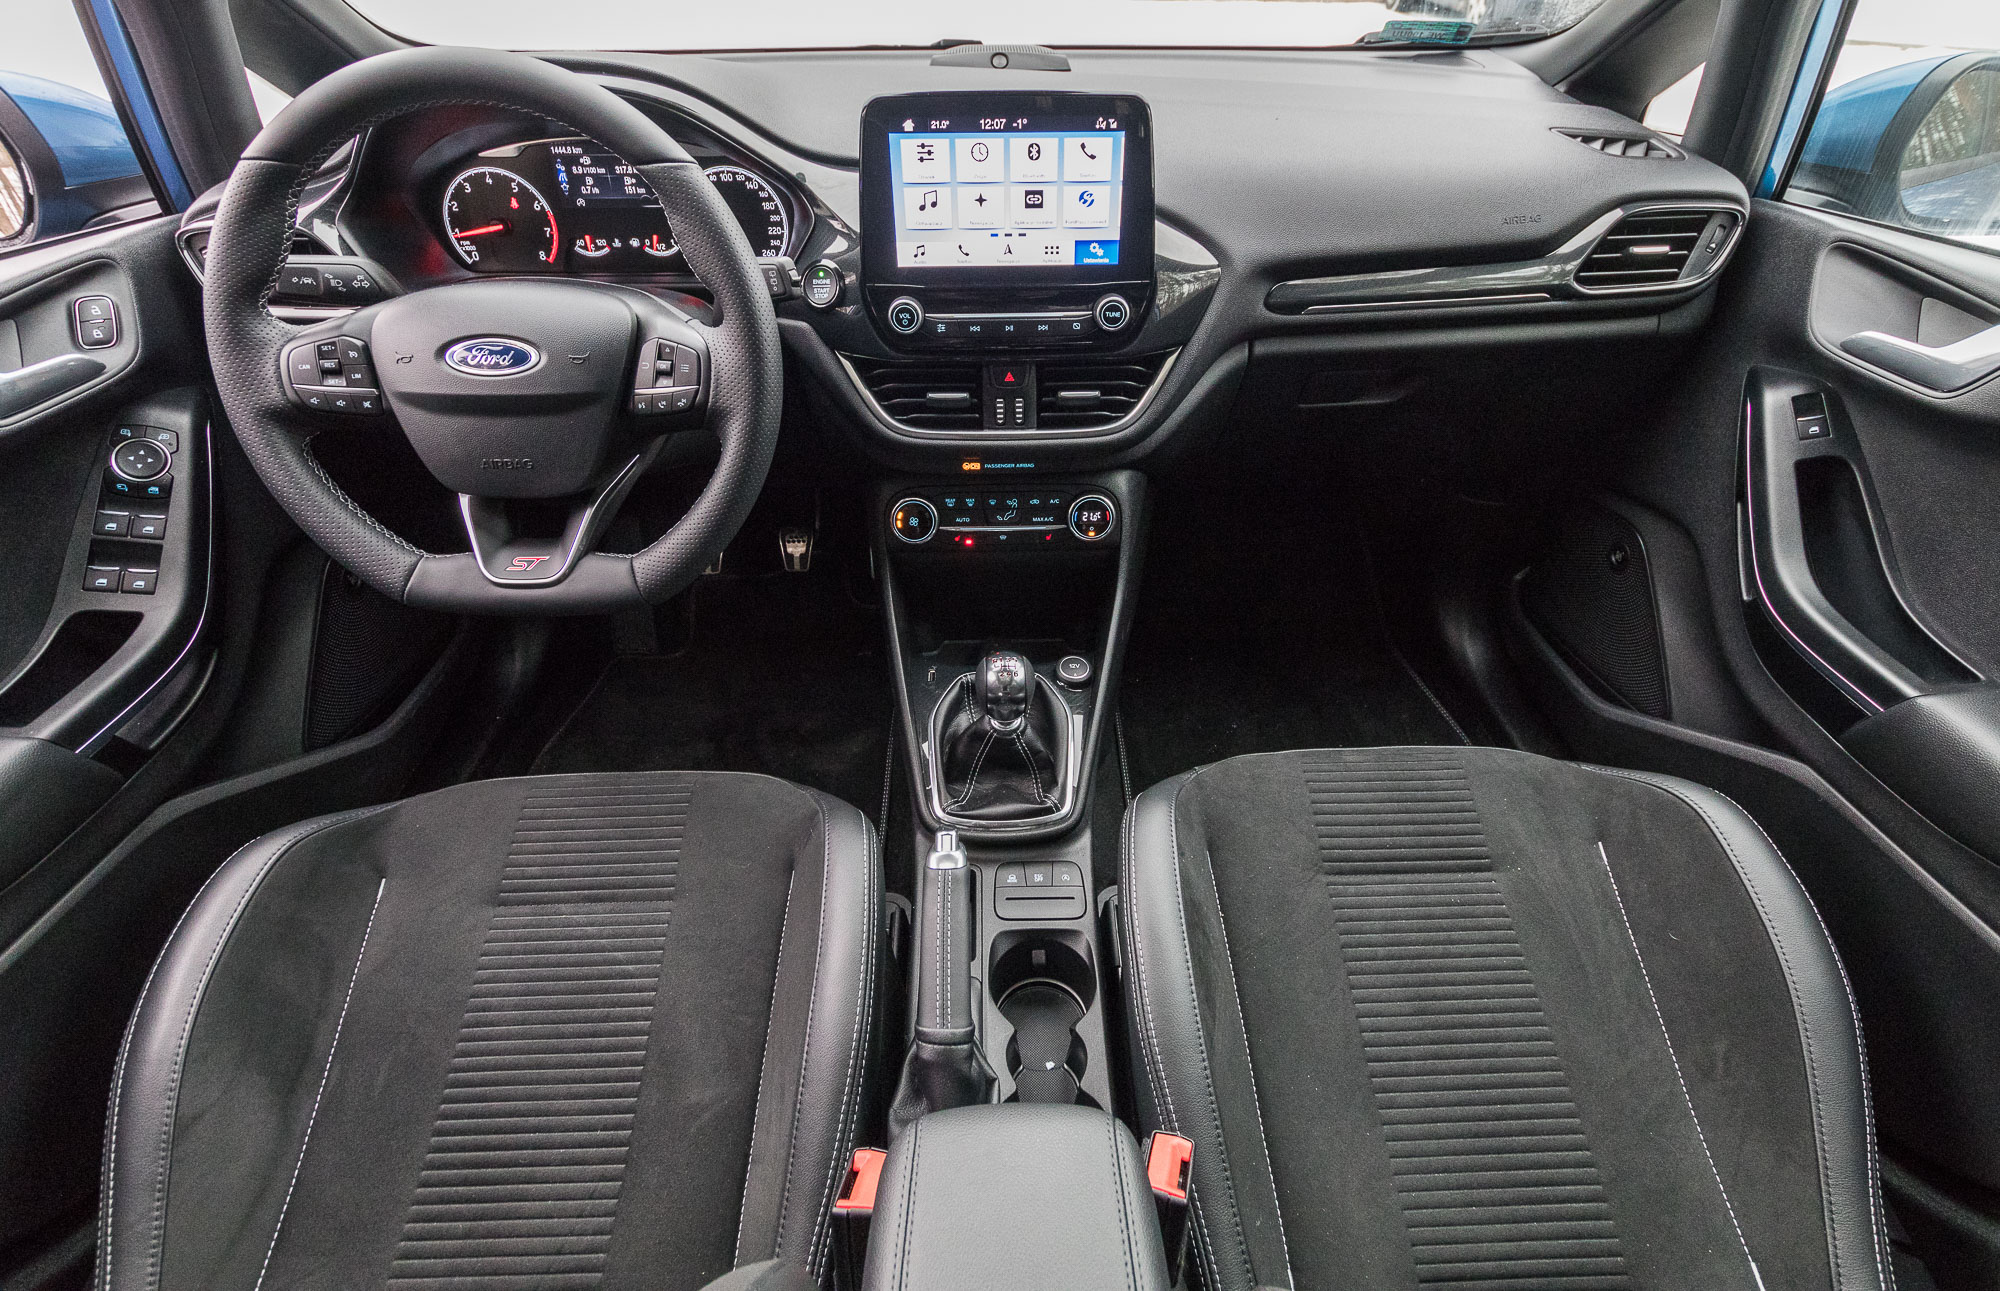 Ford Fiesta ST 2019 test